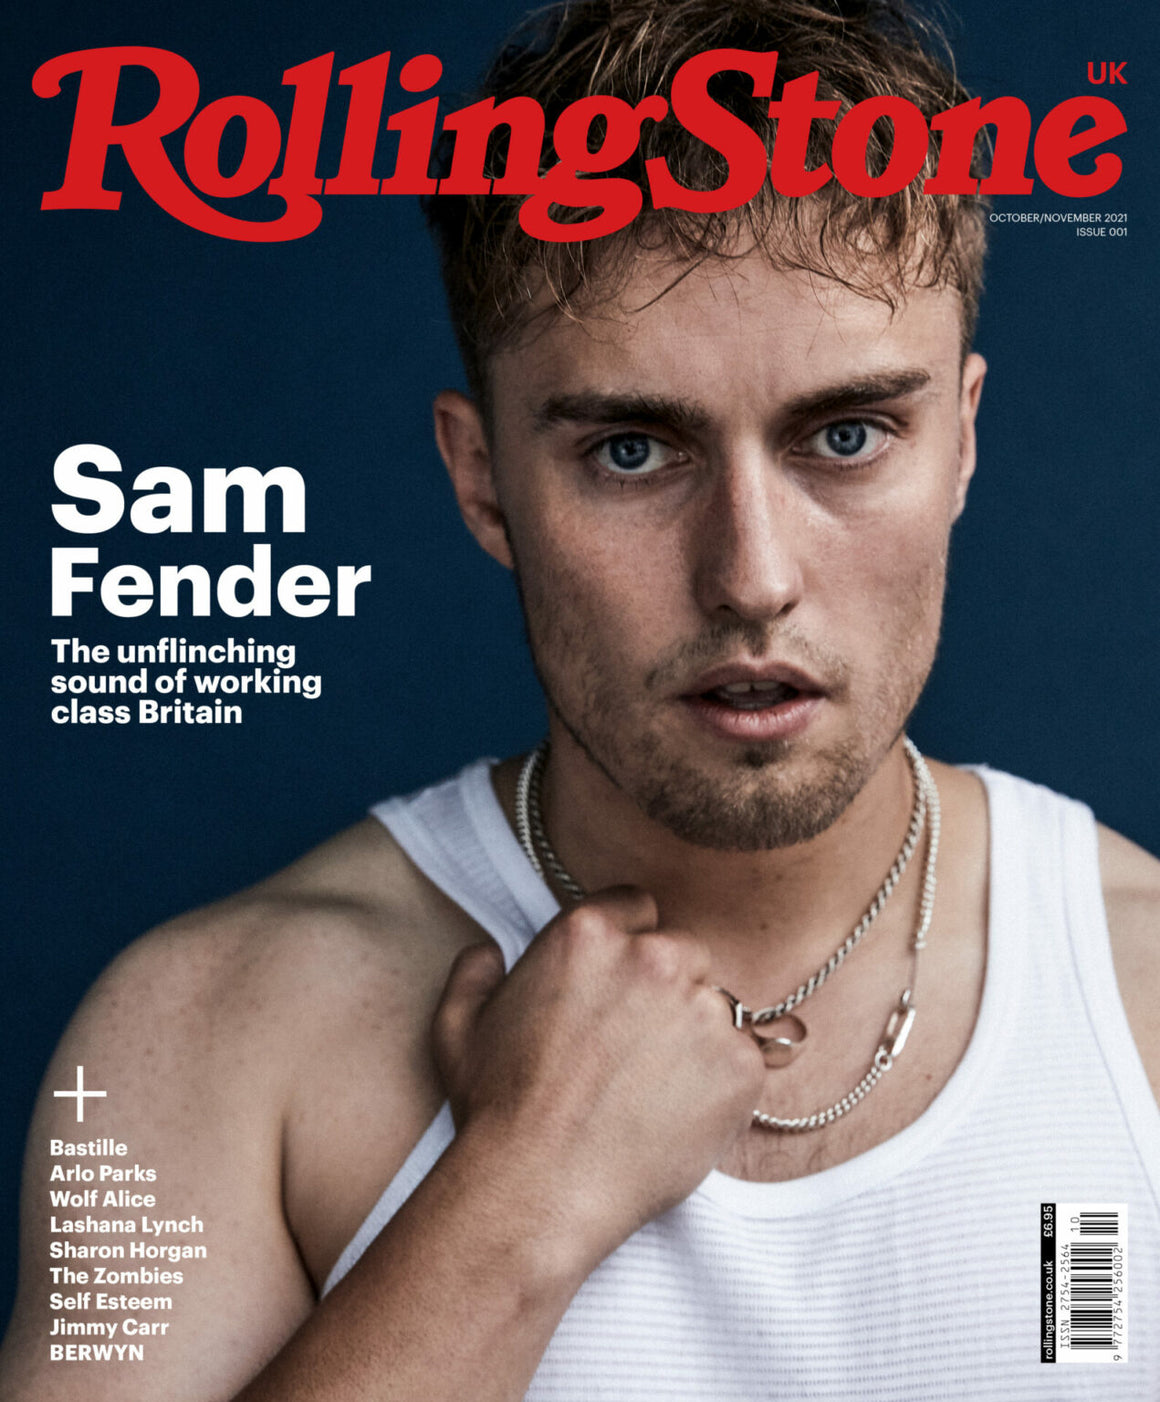 Rolling Stone Uk Magazine Issue 1 - Sam Fender Cover